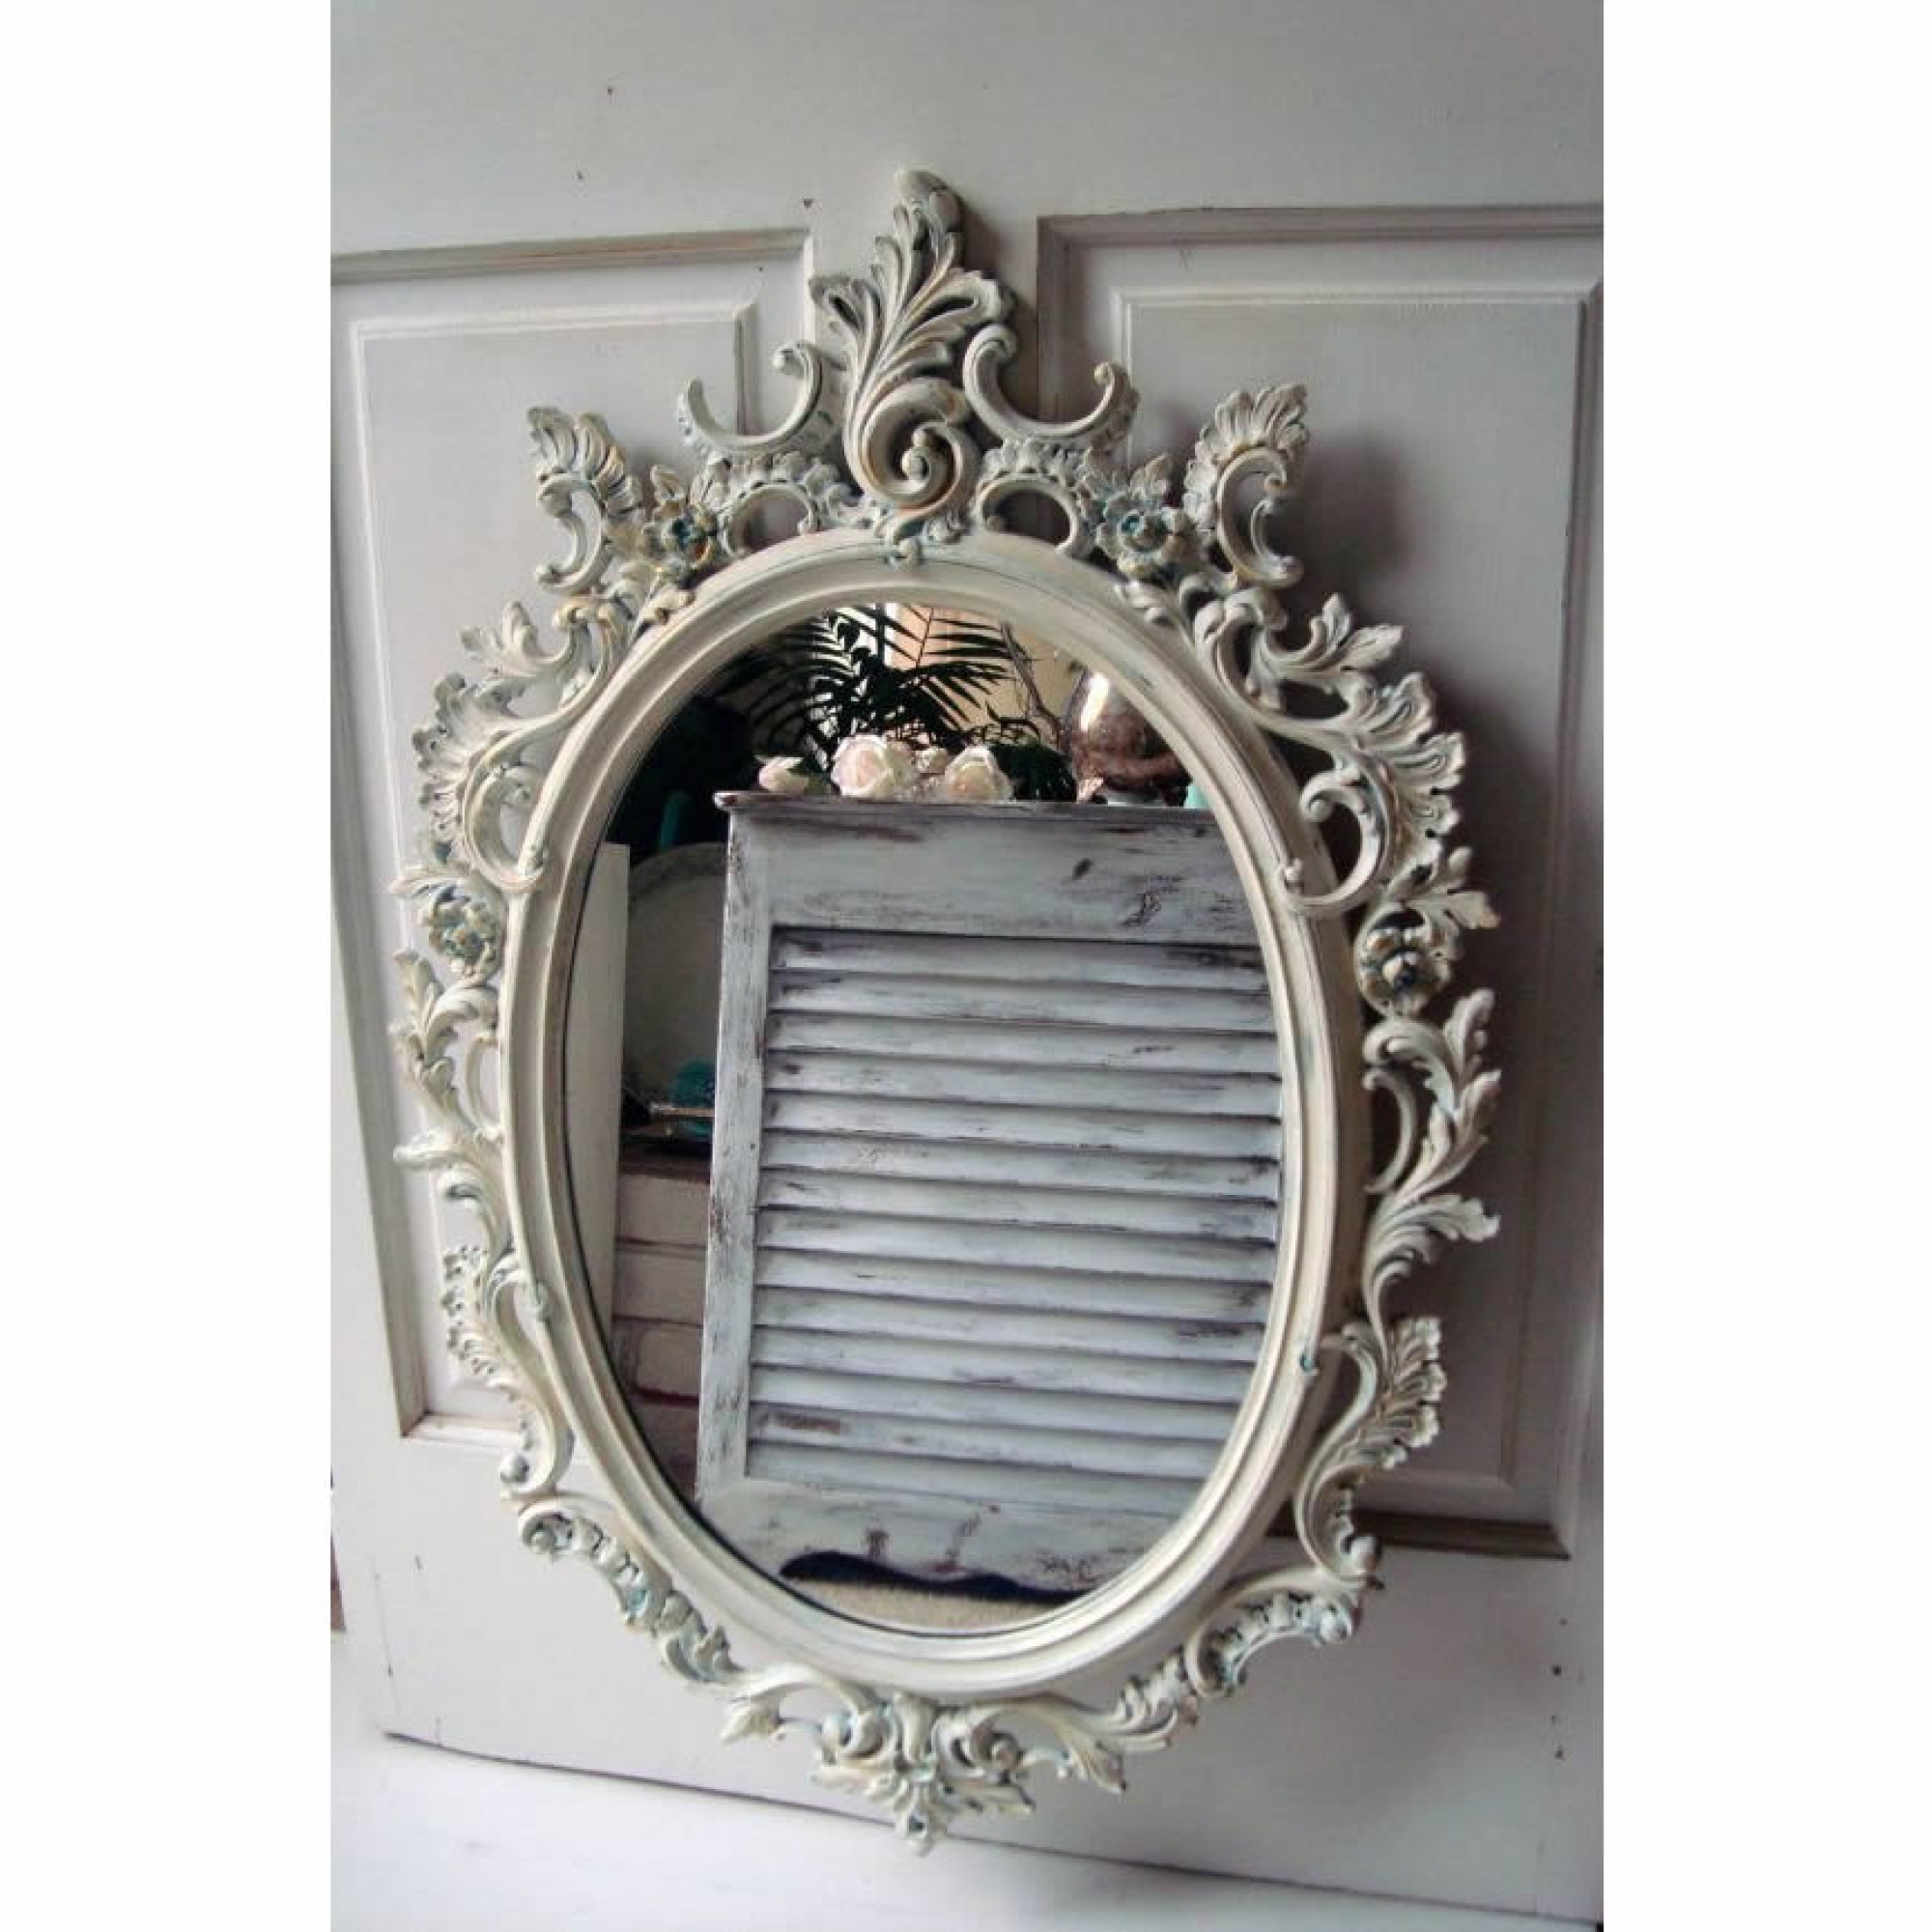 Antique white oval ornate vintage mirror